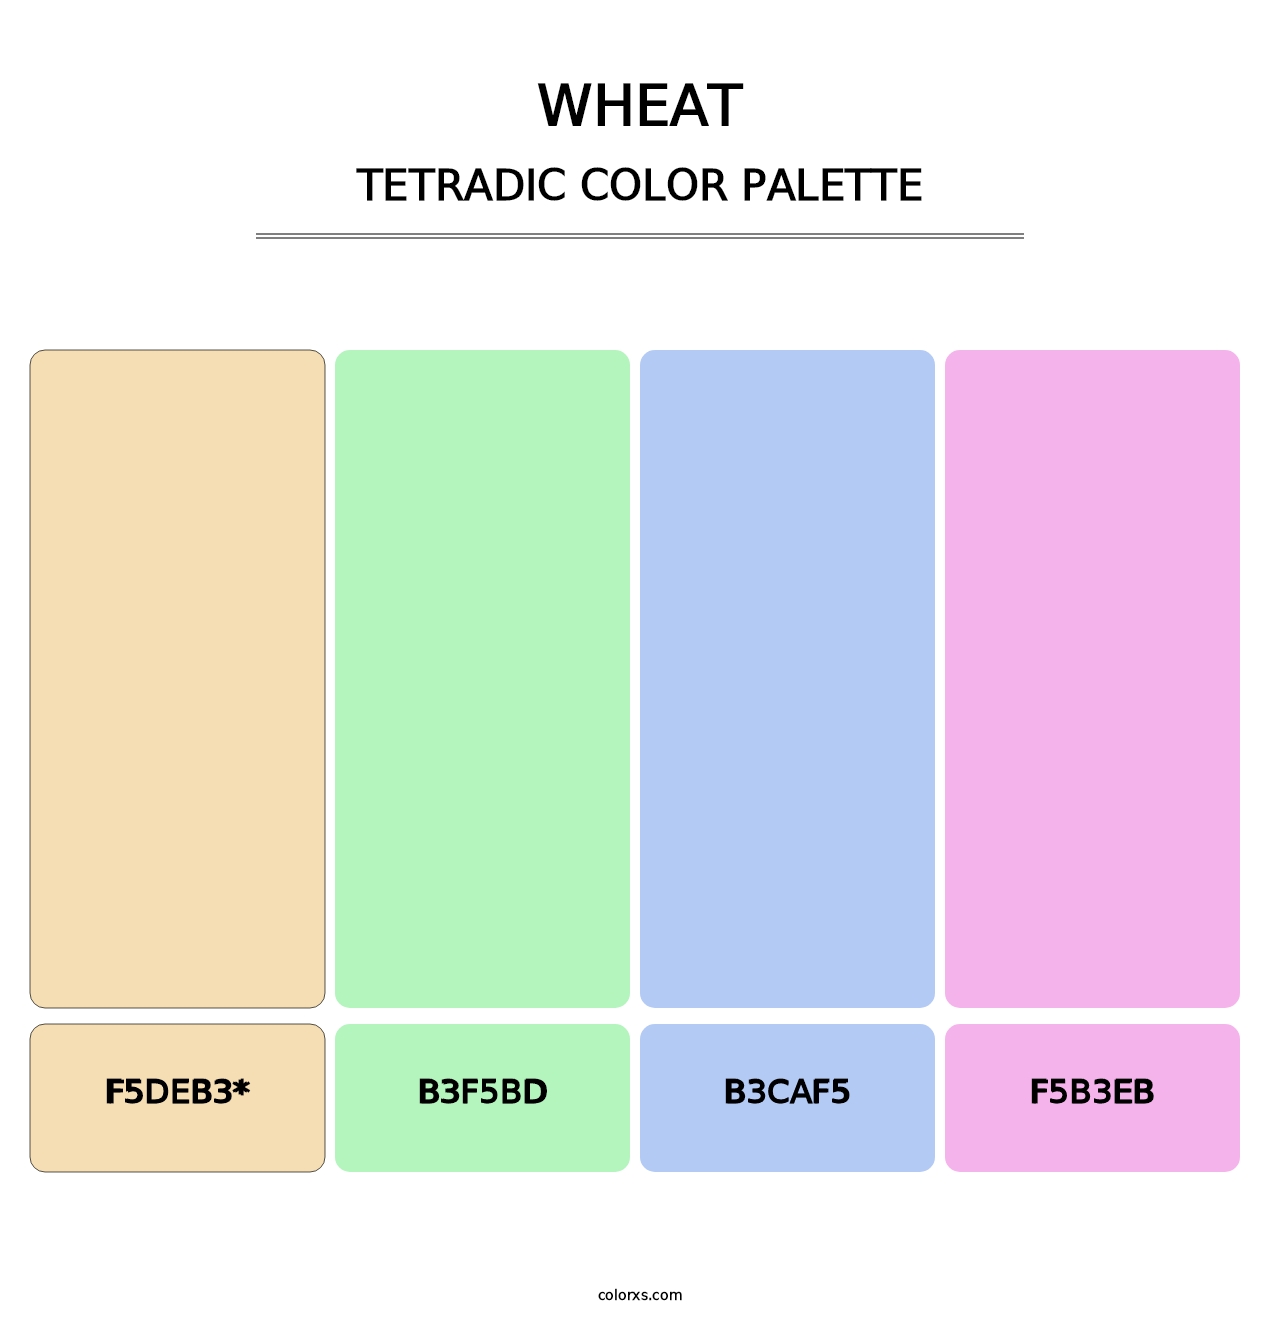 Wheat - Tetradic Color Palette